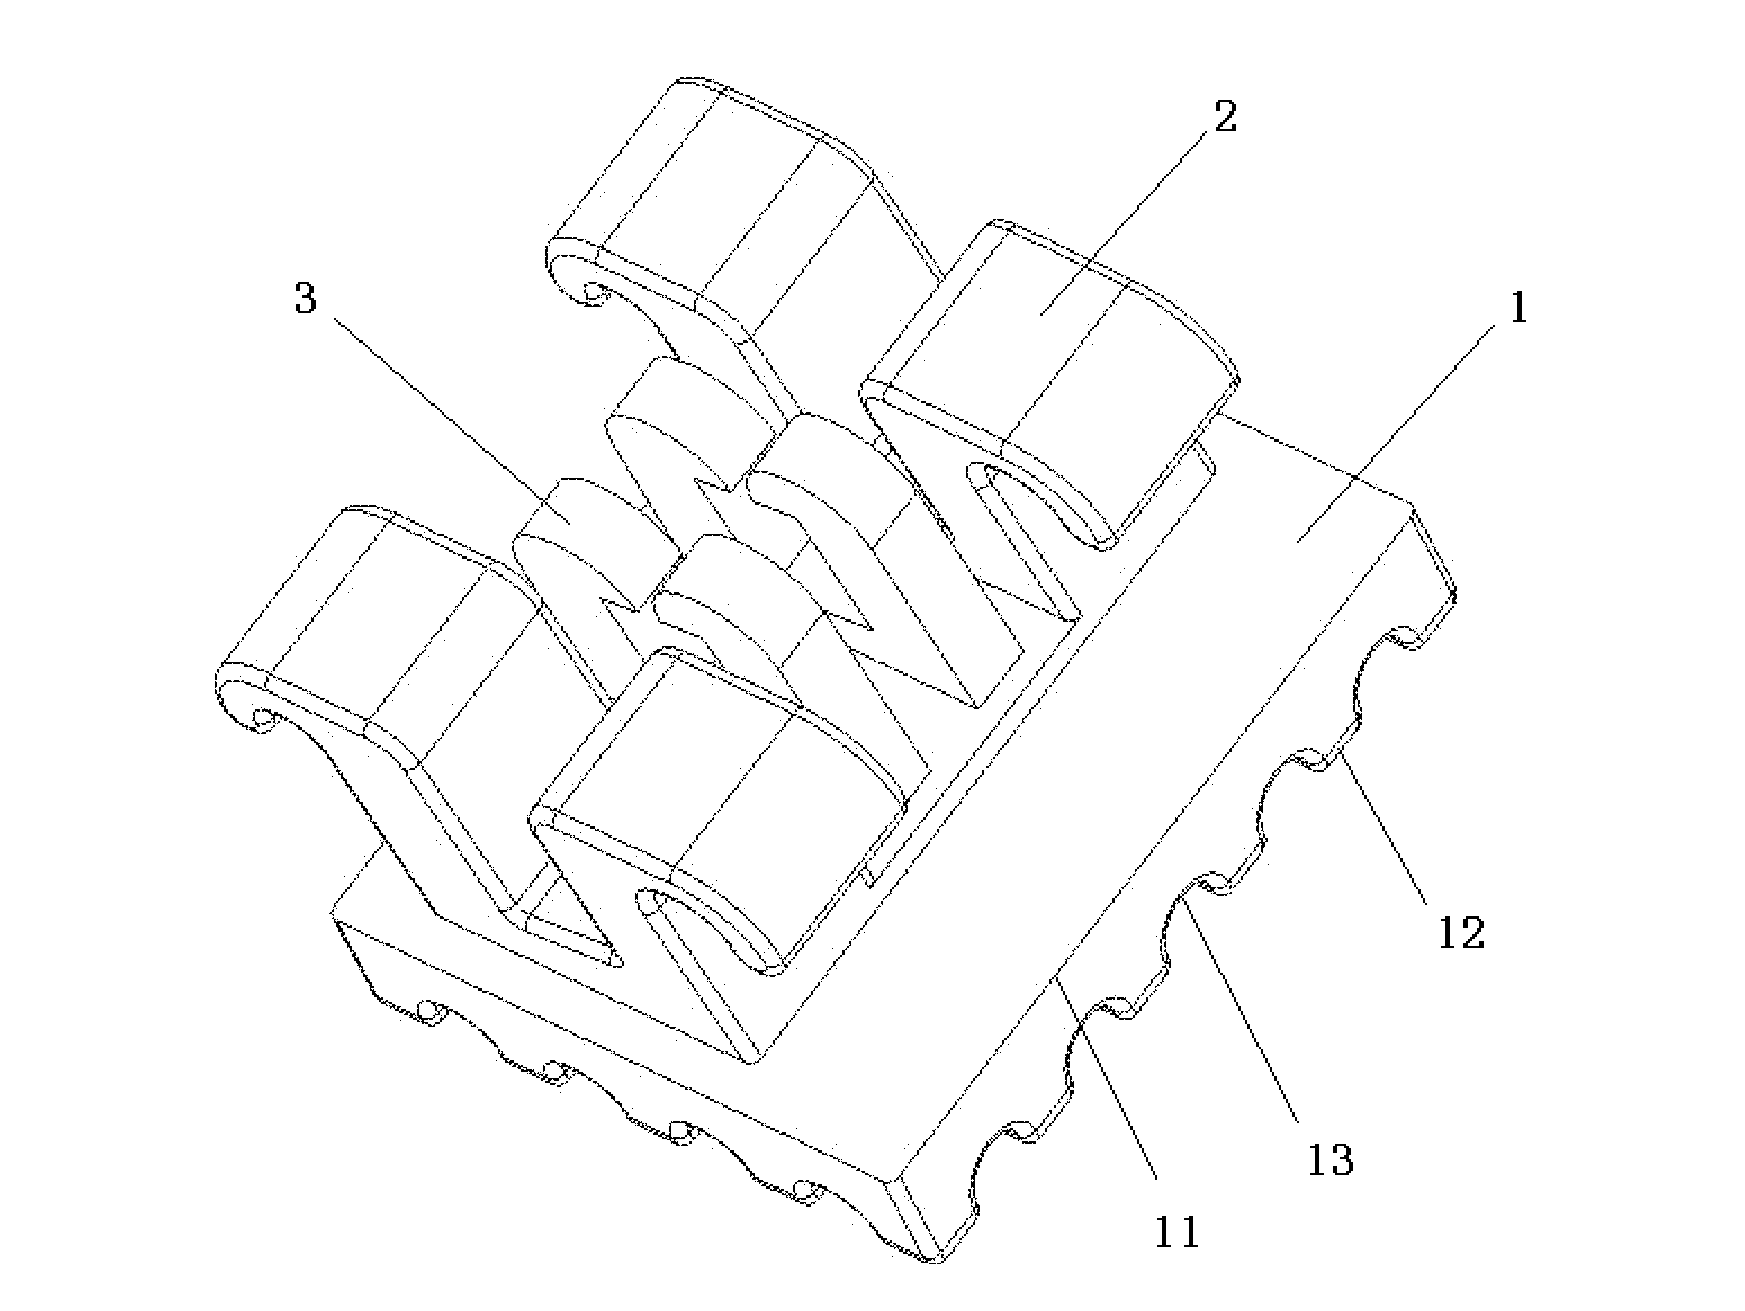 Monolithic metallic self-ligating bracket with locking catch devices